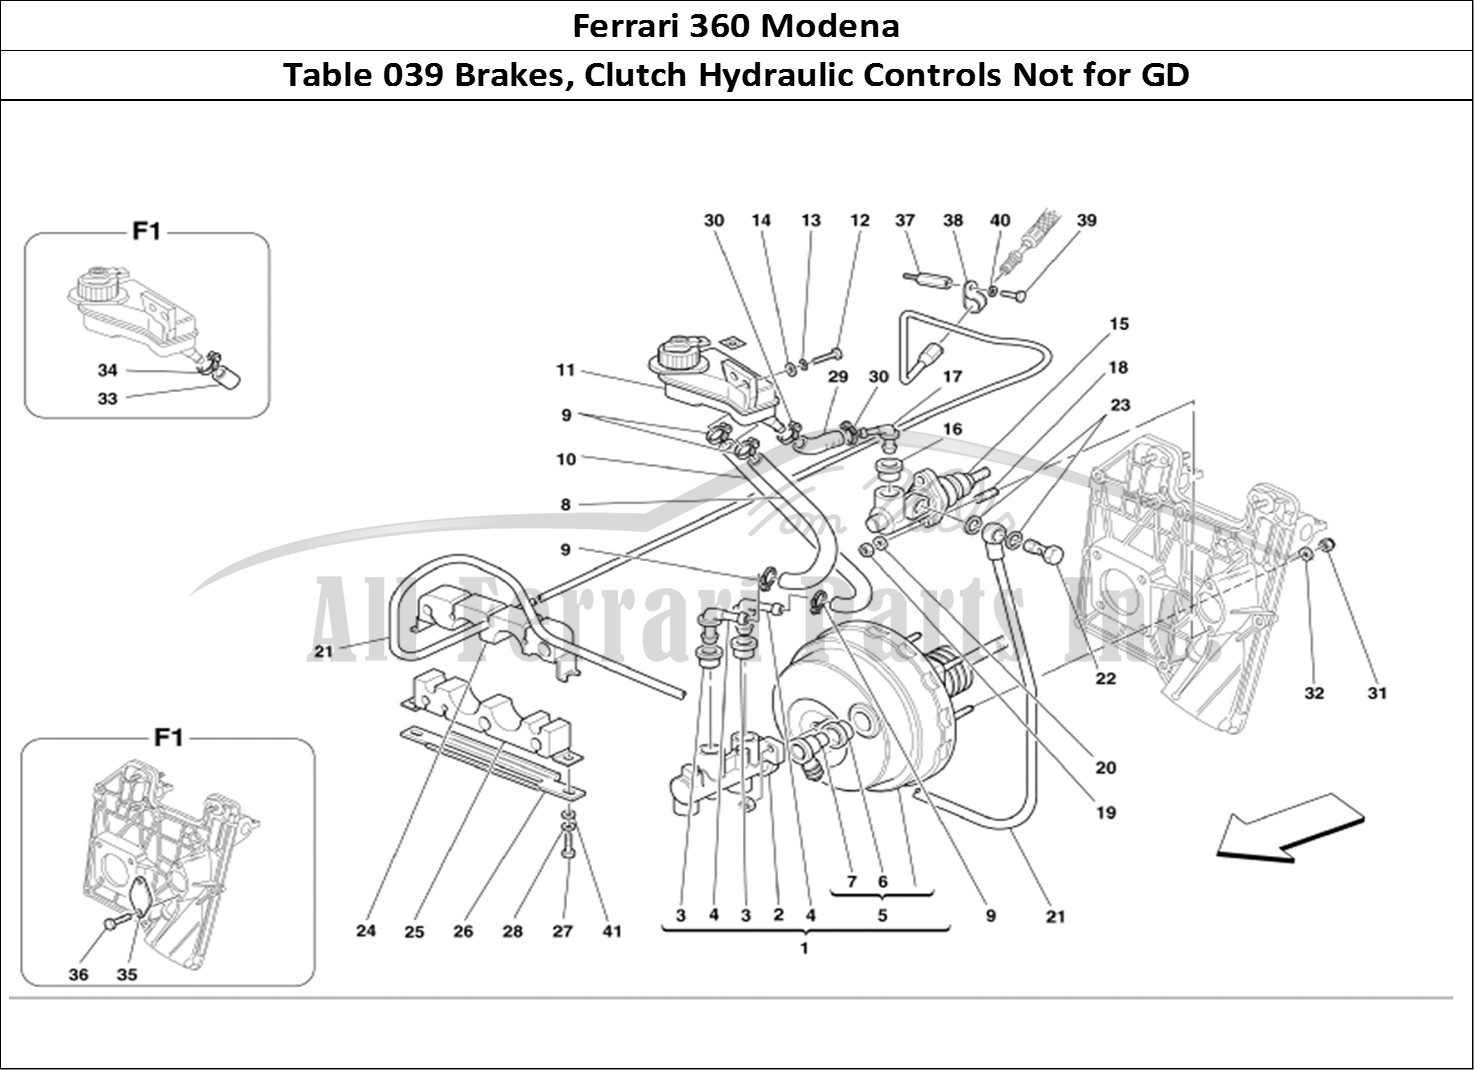 Ferrari Parts Ferrari 360 Modena Page 039 Brakes and Clutch Hydraul